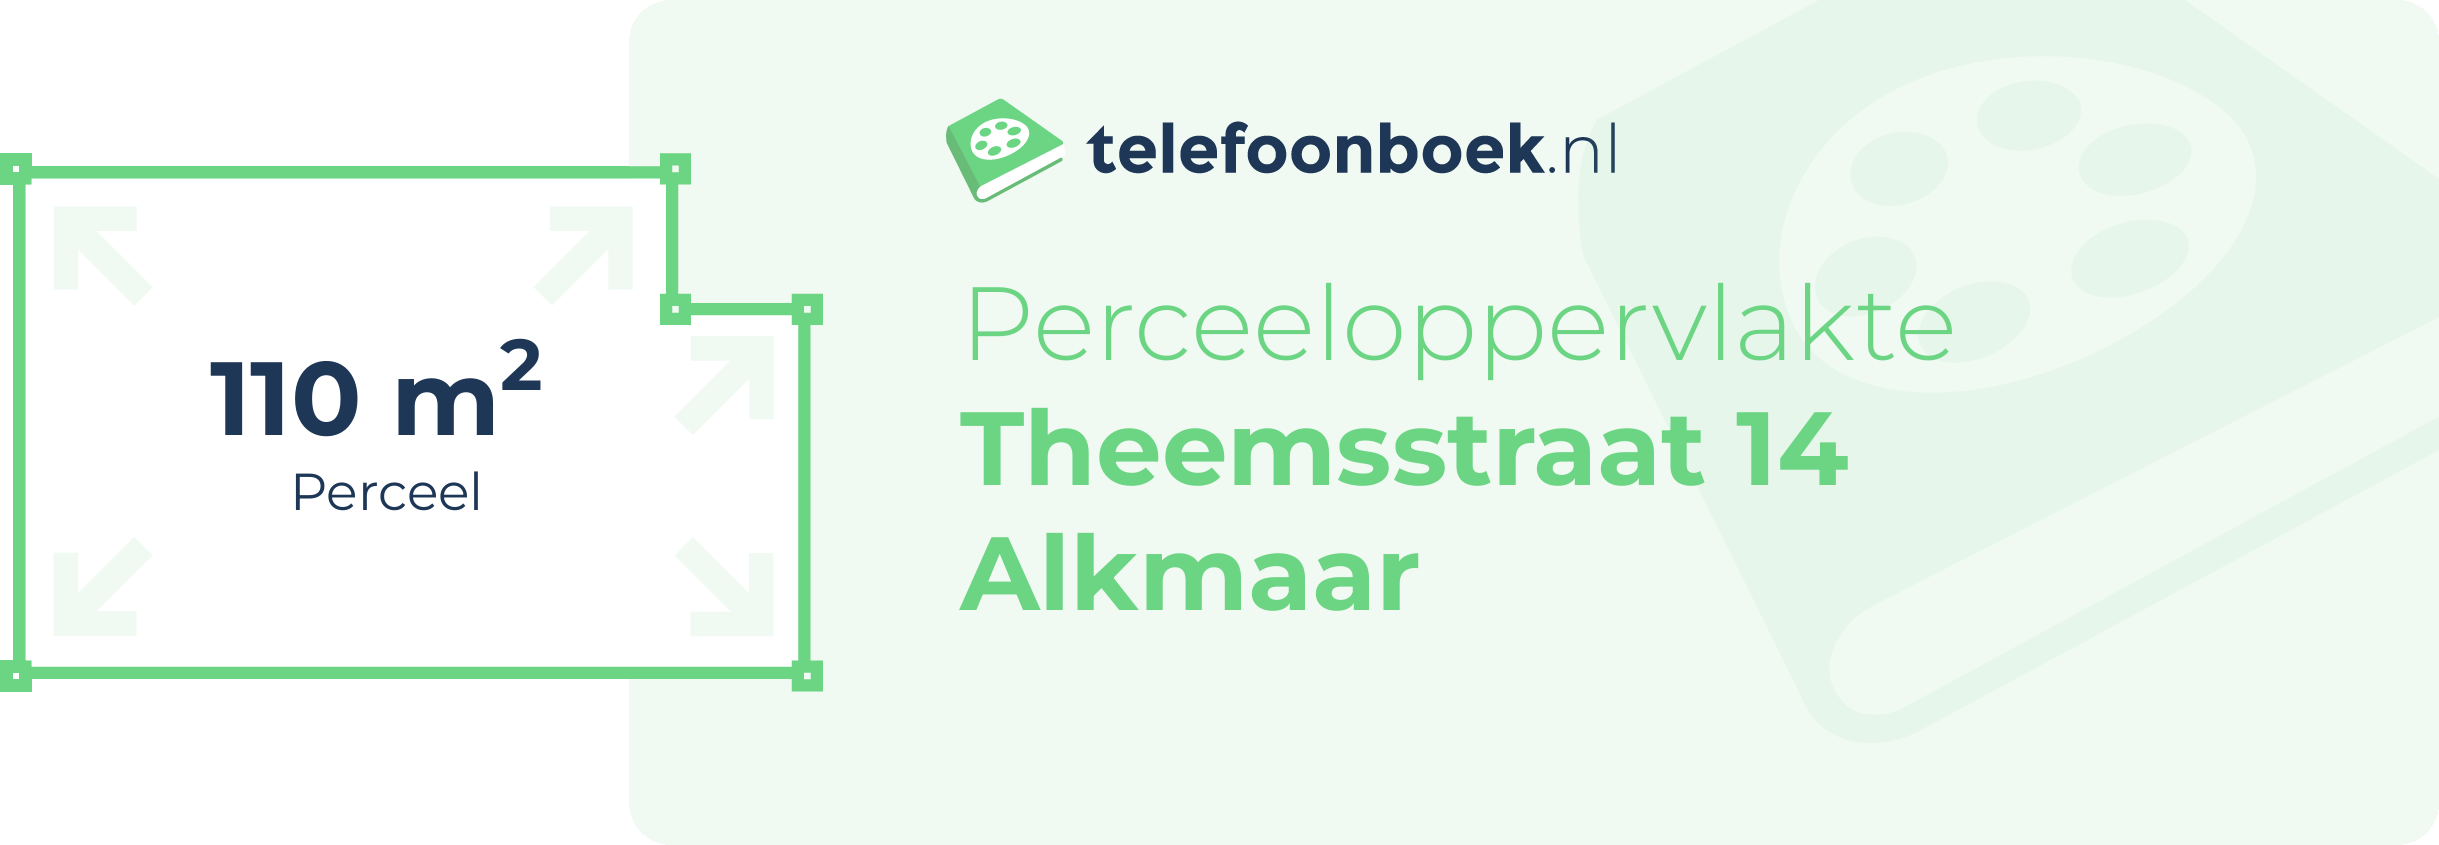 Perceeloppervlakte Theemsstraat 14 Alkmaar